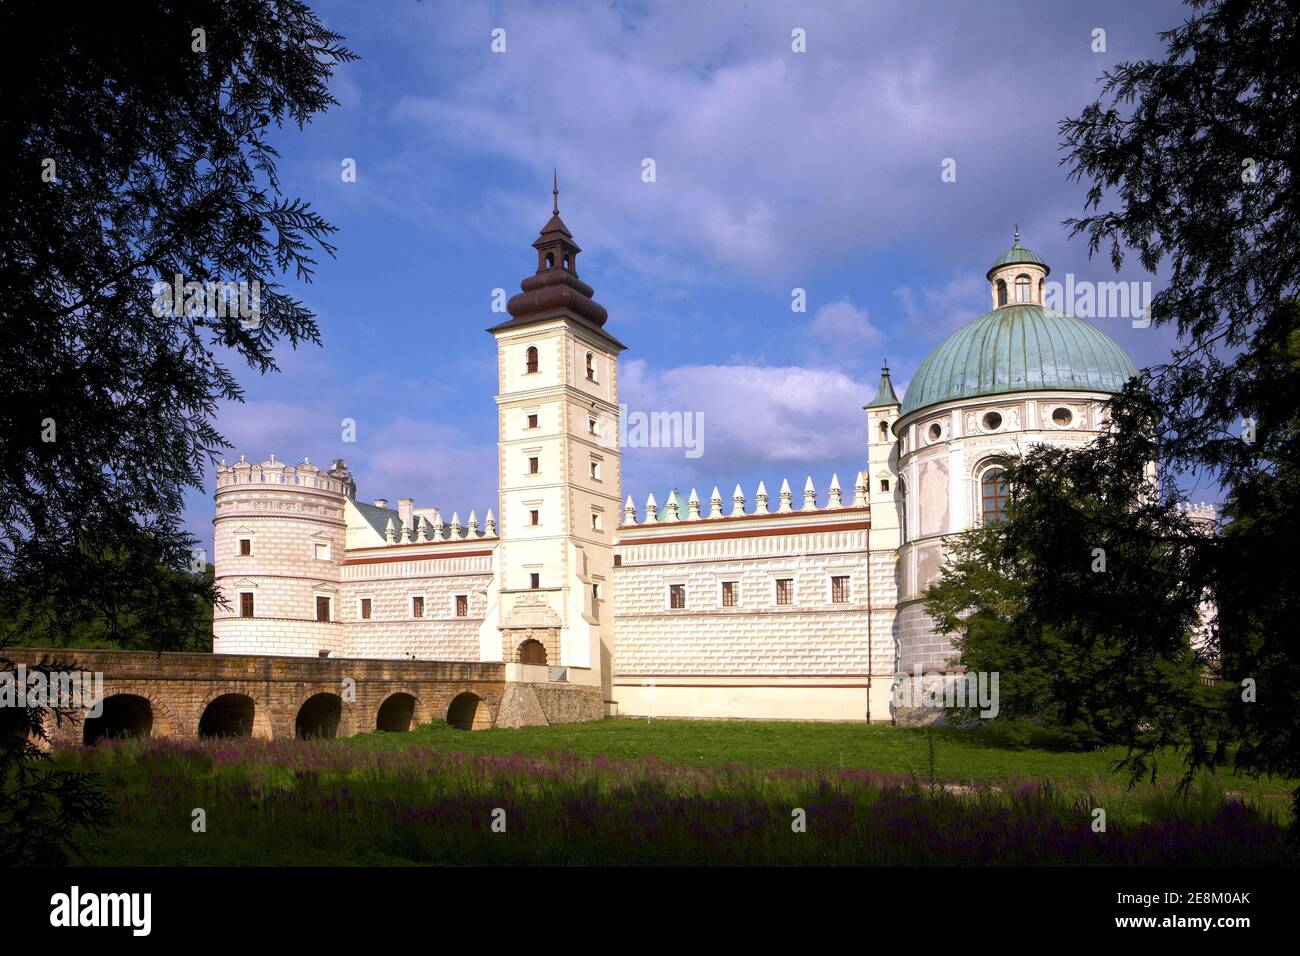 Poland, Krasiczyn, castle. Stock Photo